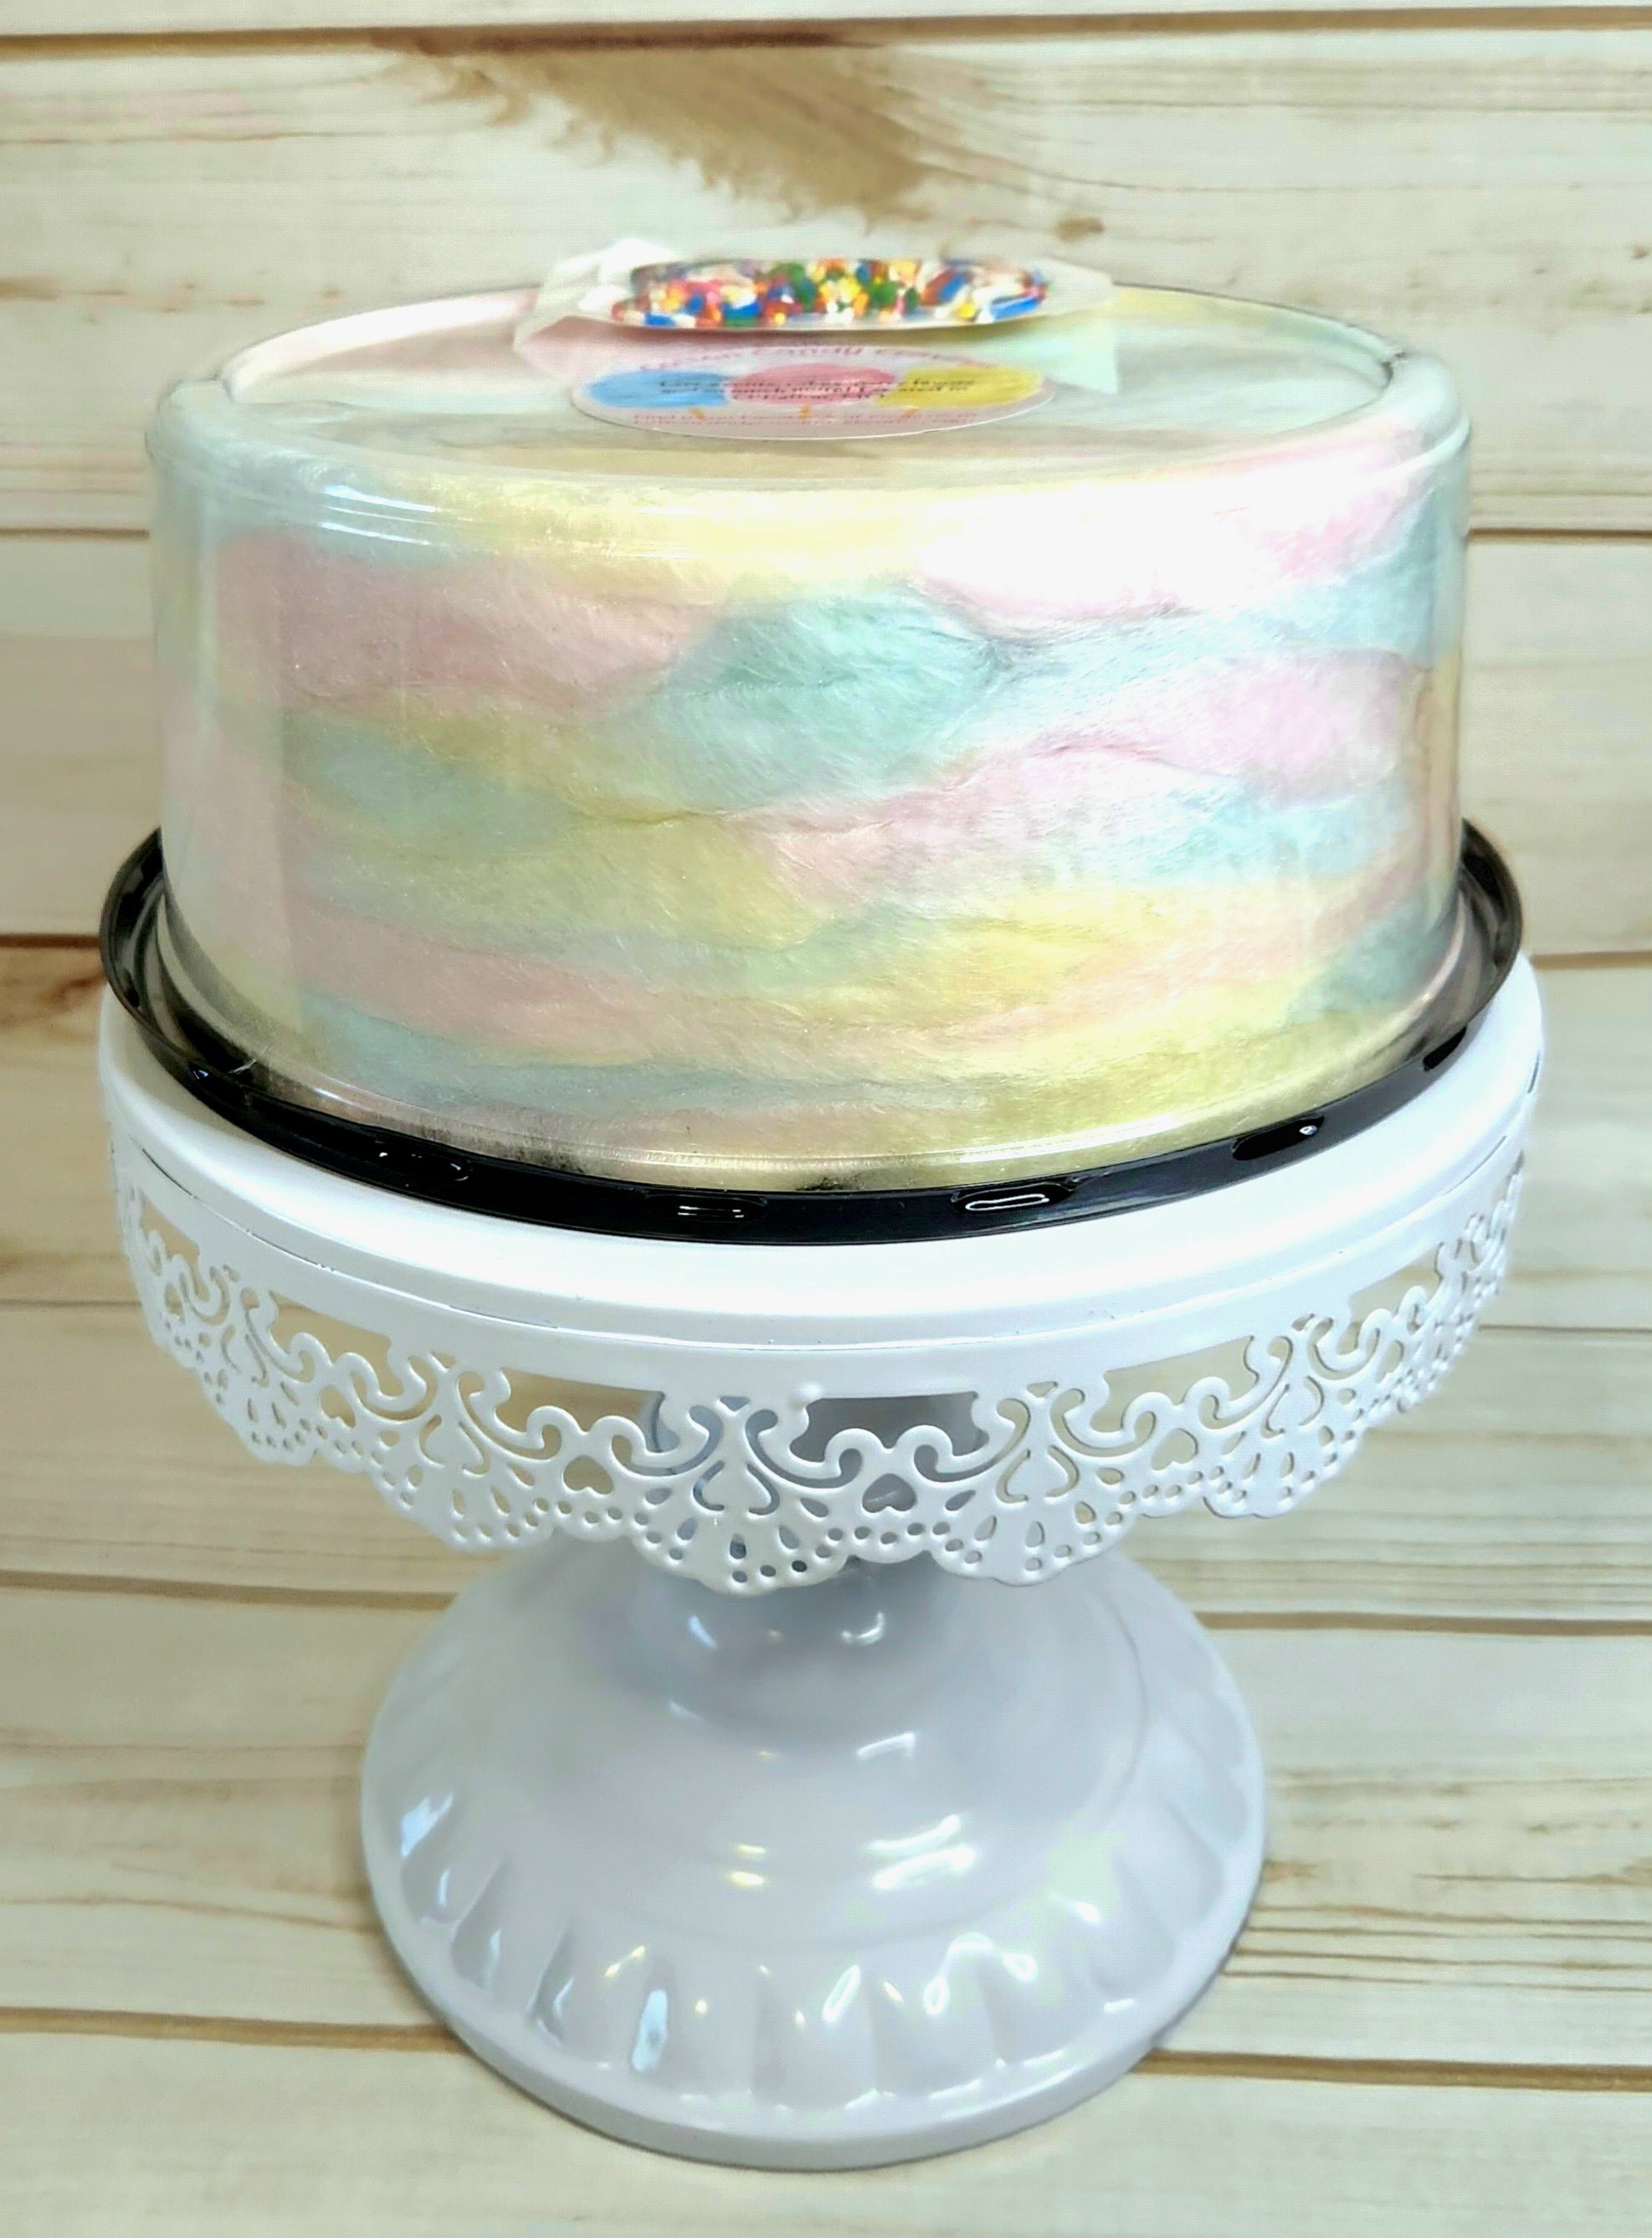 Tie-Dye Sprinkle Surprise Cake! – My Dessert Diet